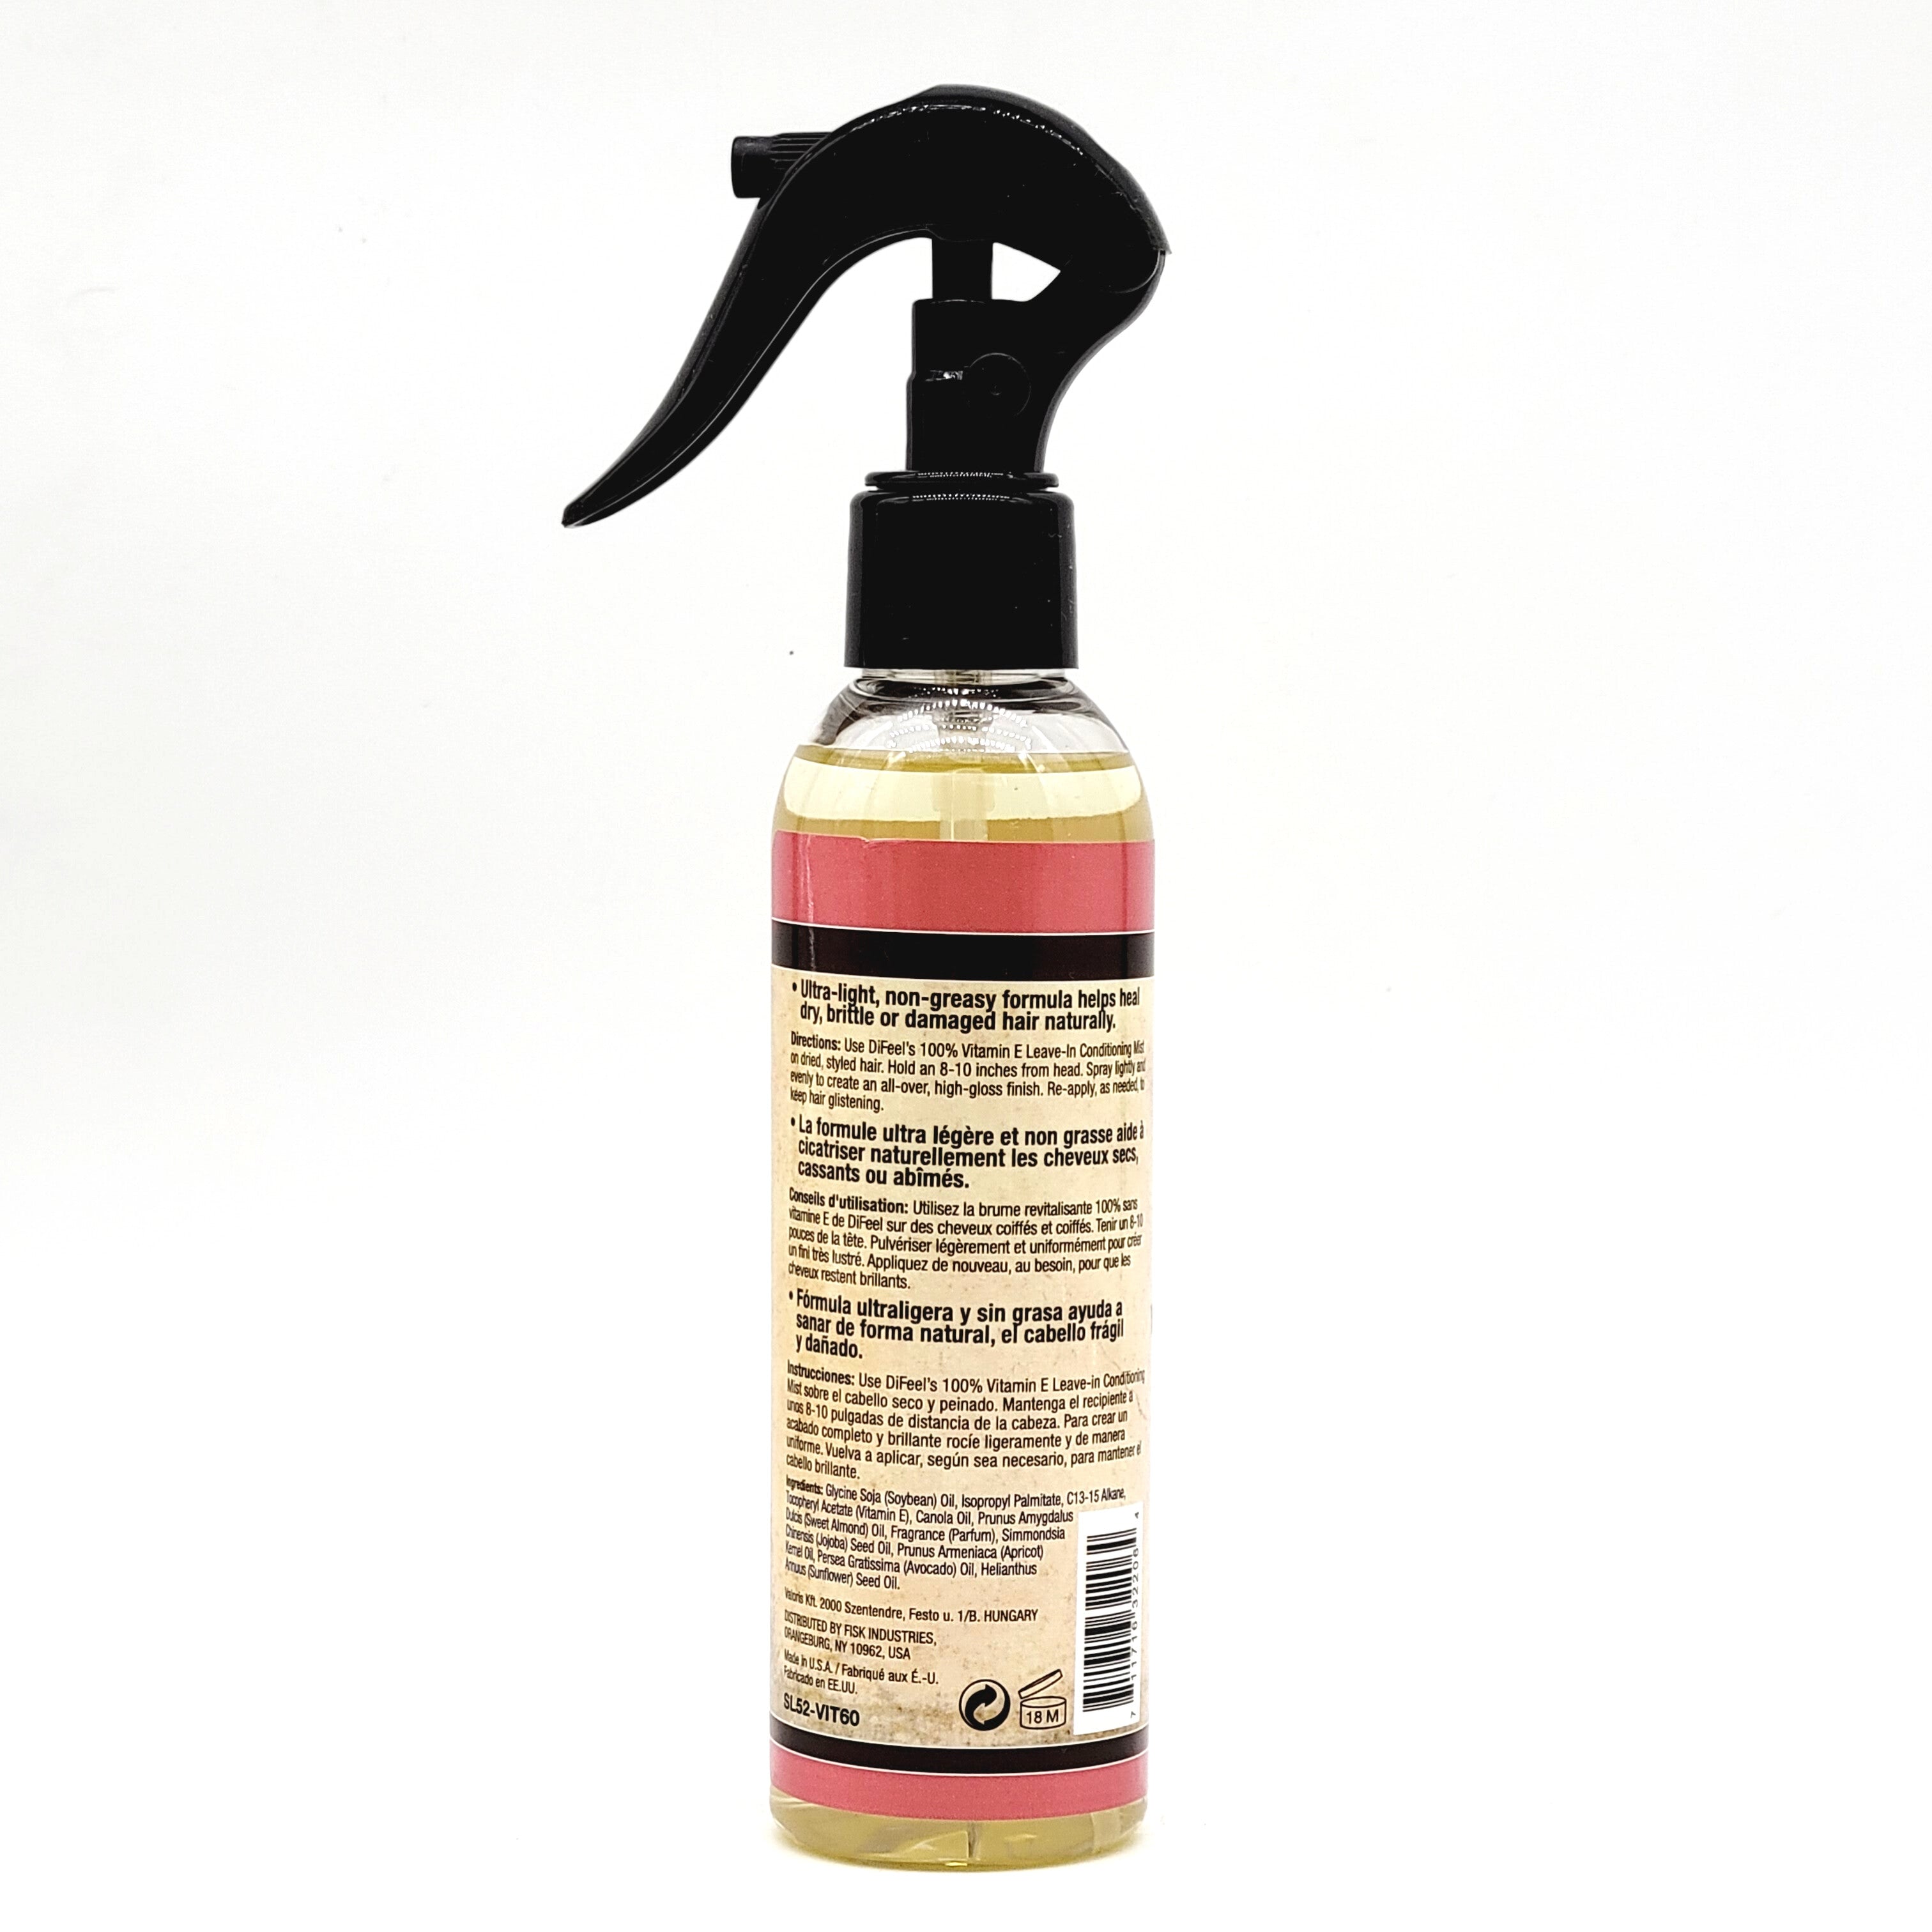 Difeel Anti-Frizz Leave in Conditioning Spray with 100% Pure Vitamin E Oil 6 oz.